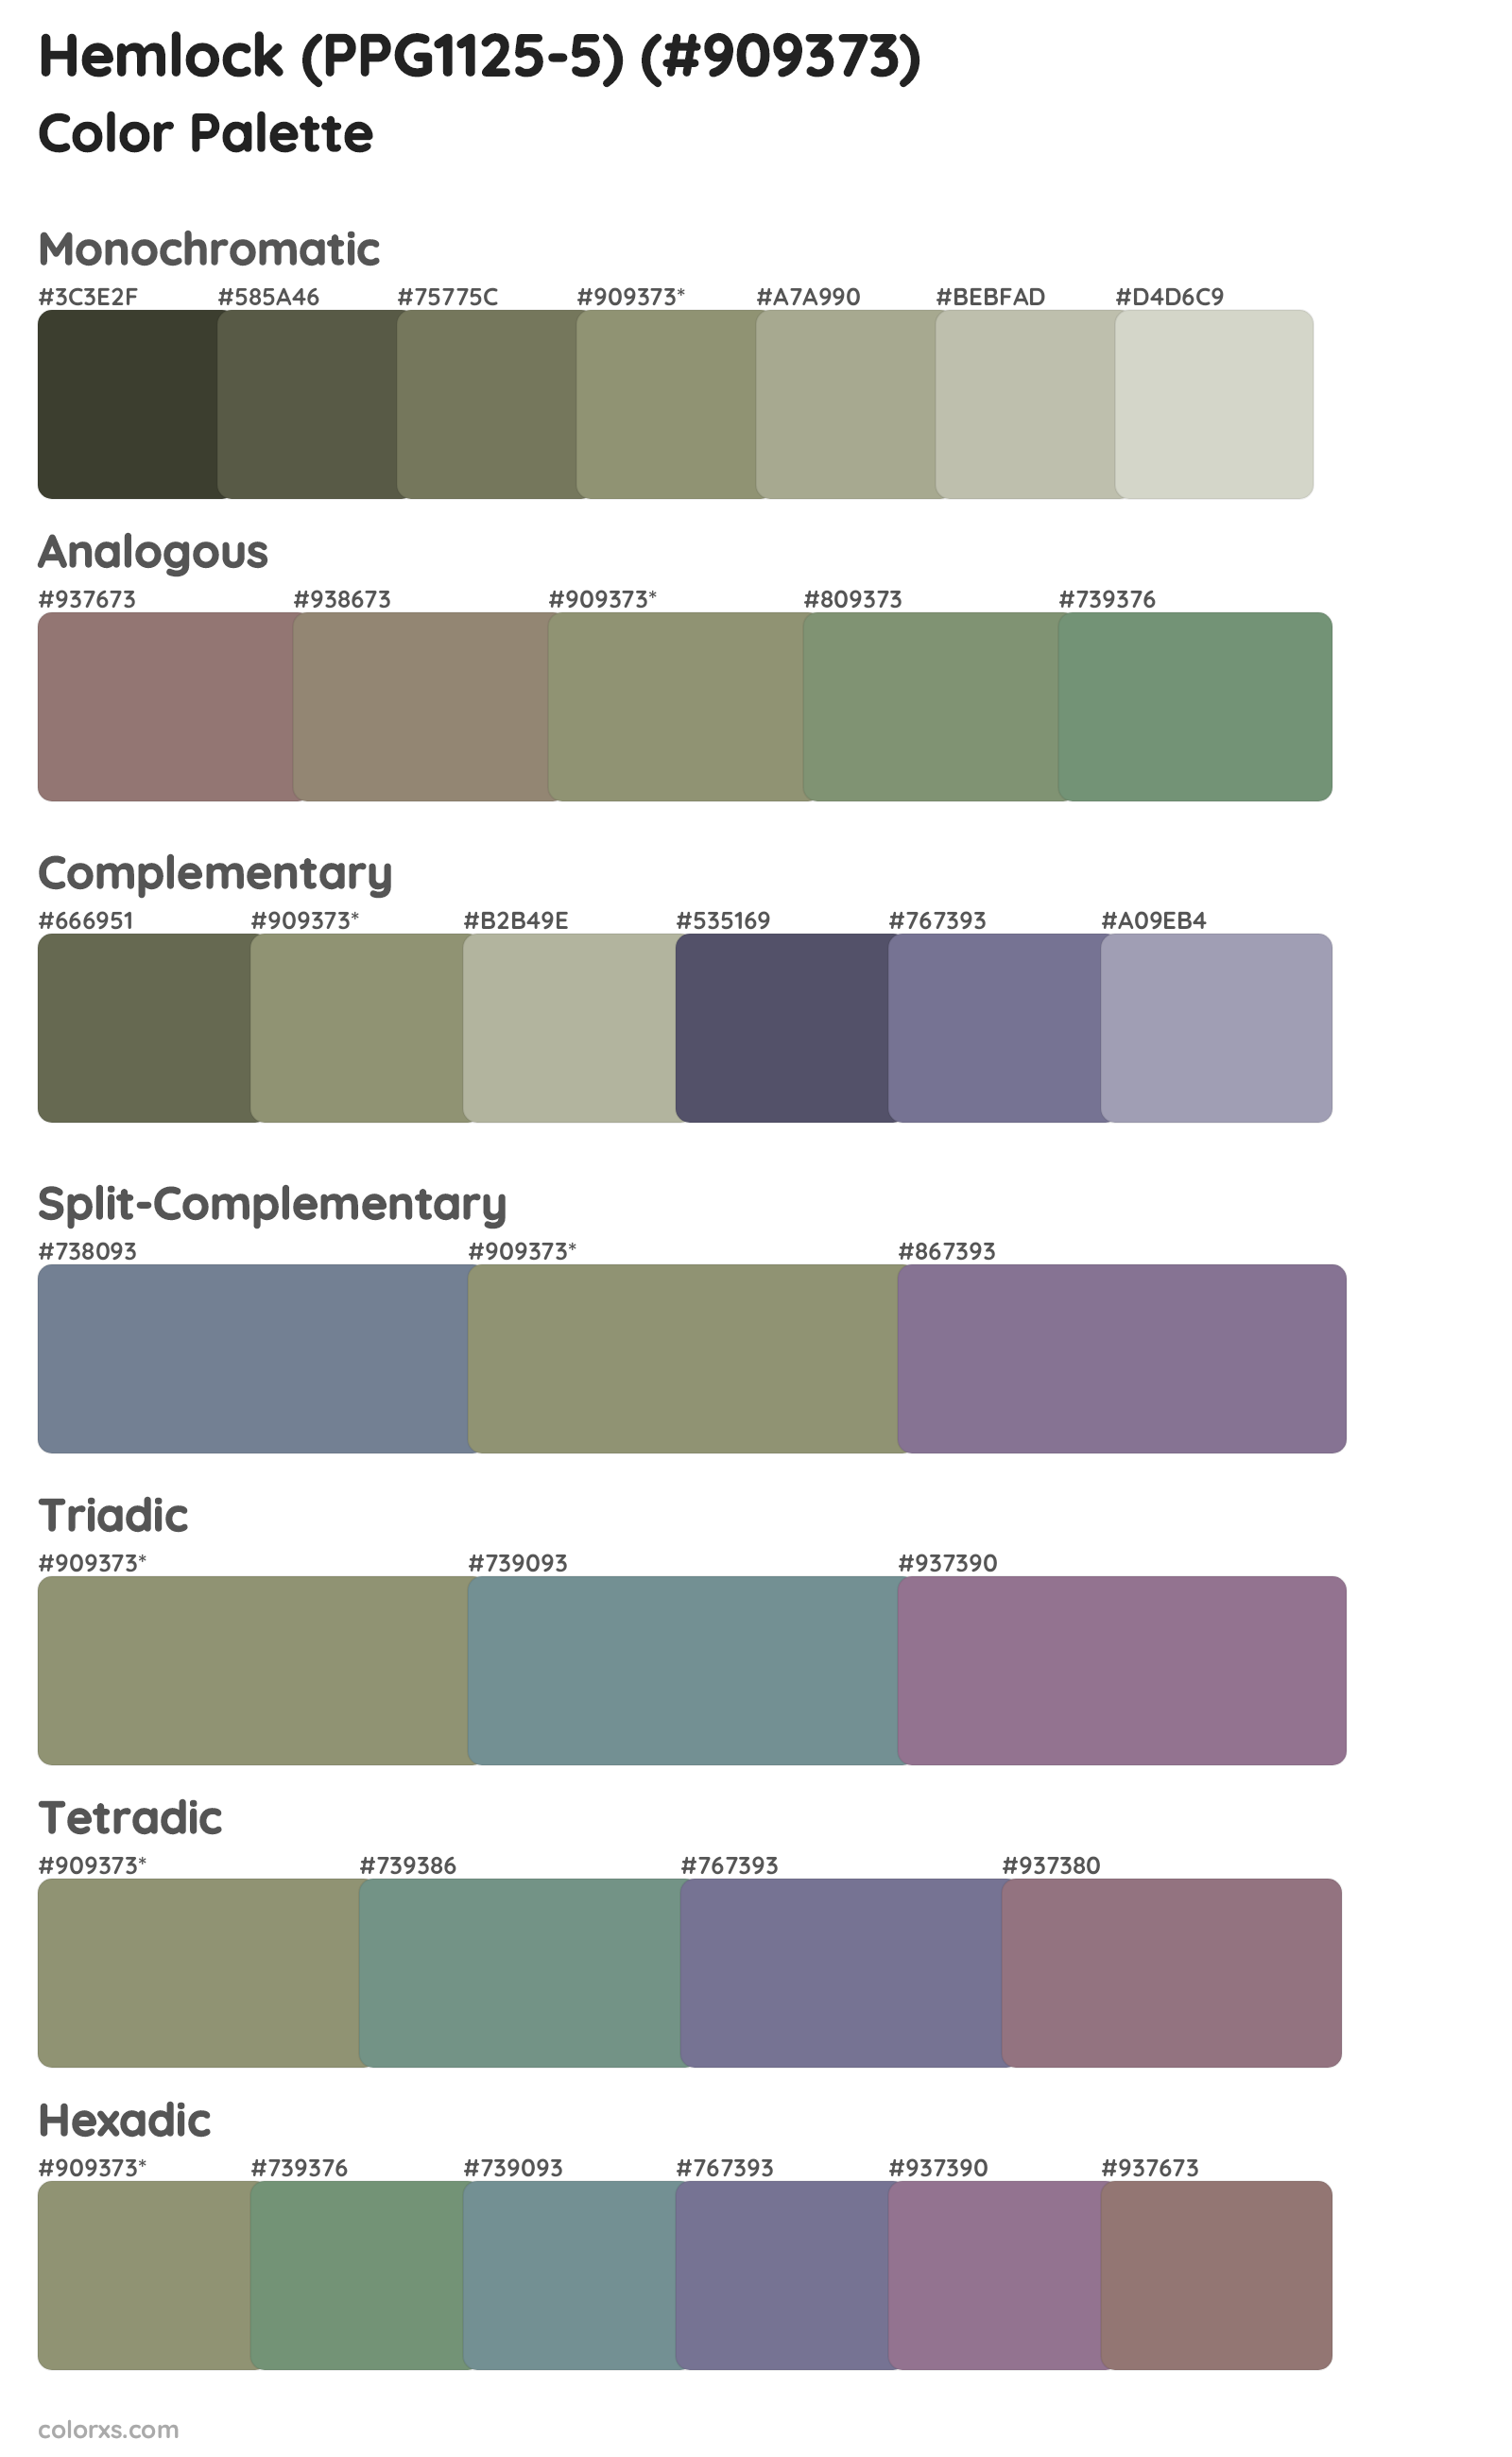 Hemlock (PPG1125-5) Color Scheme Palettes